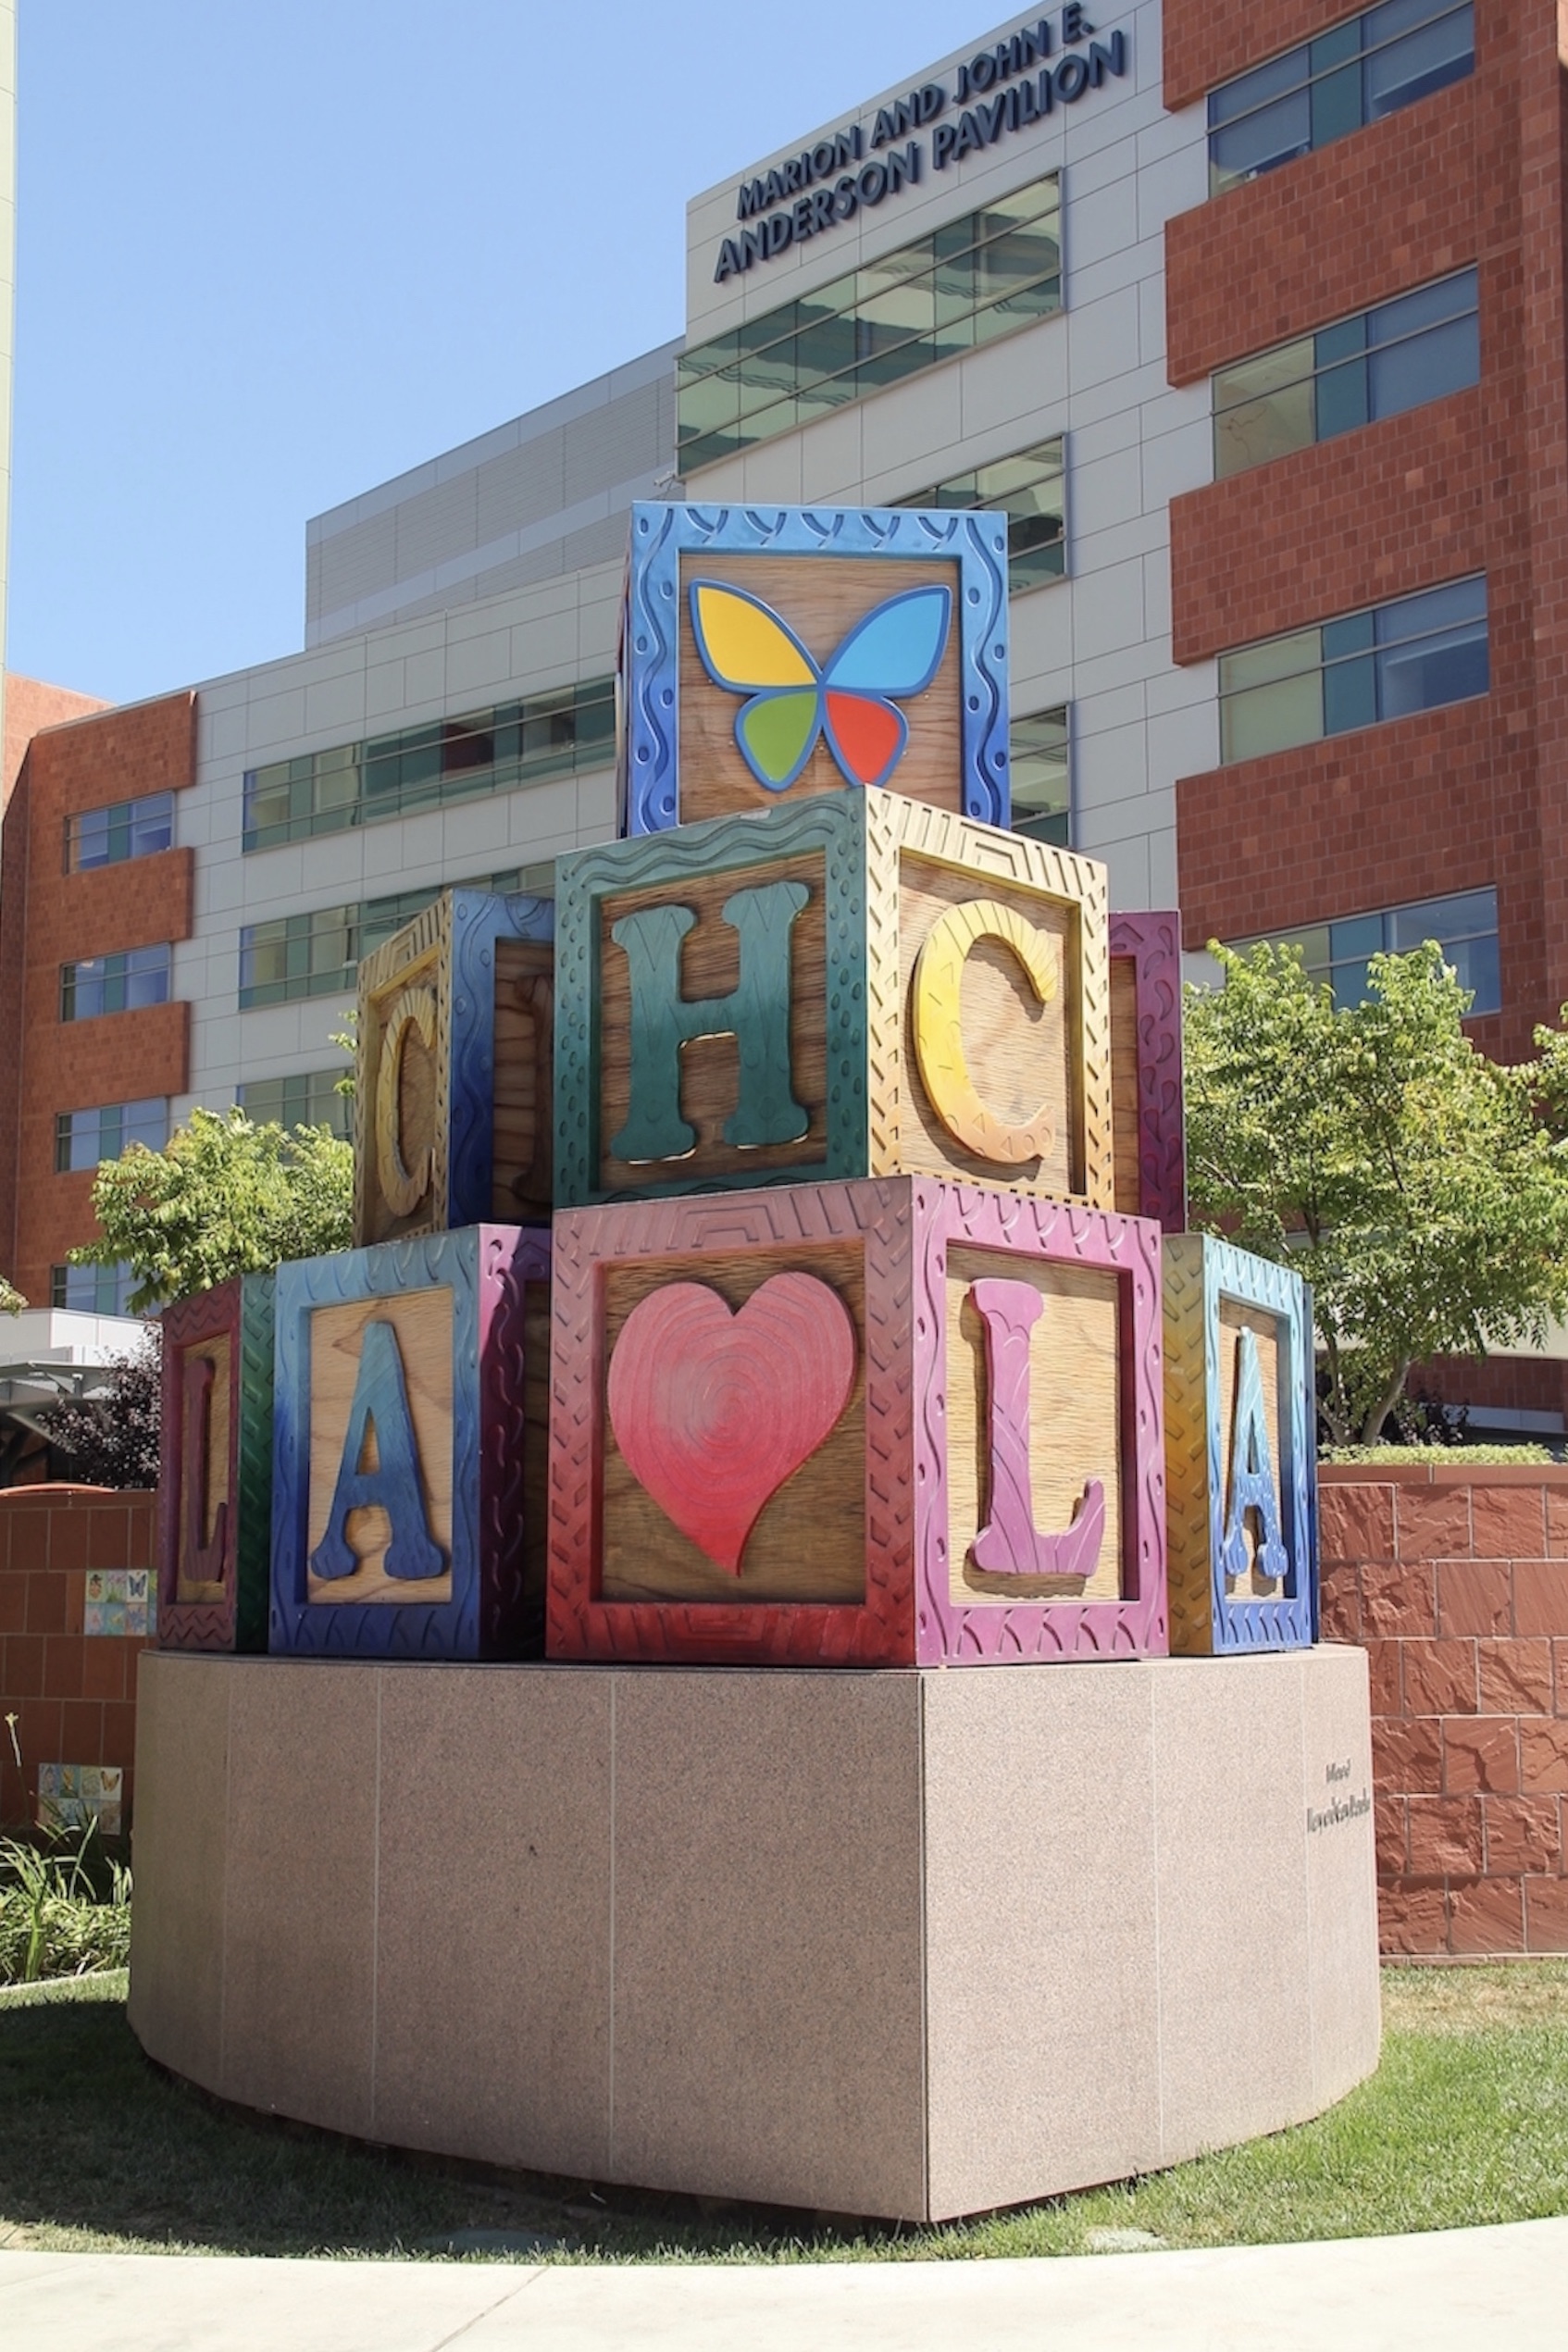 Large sculpture of children's ABC blocks